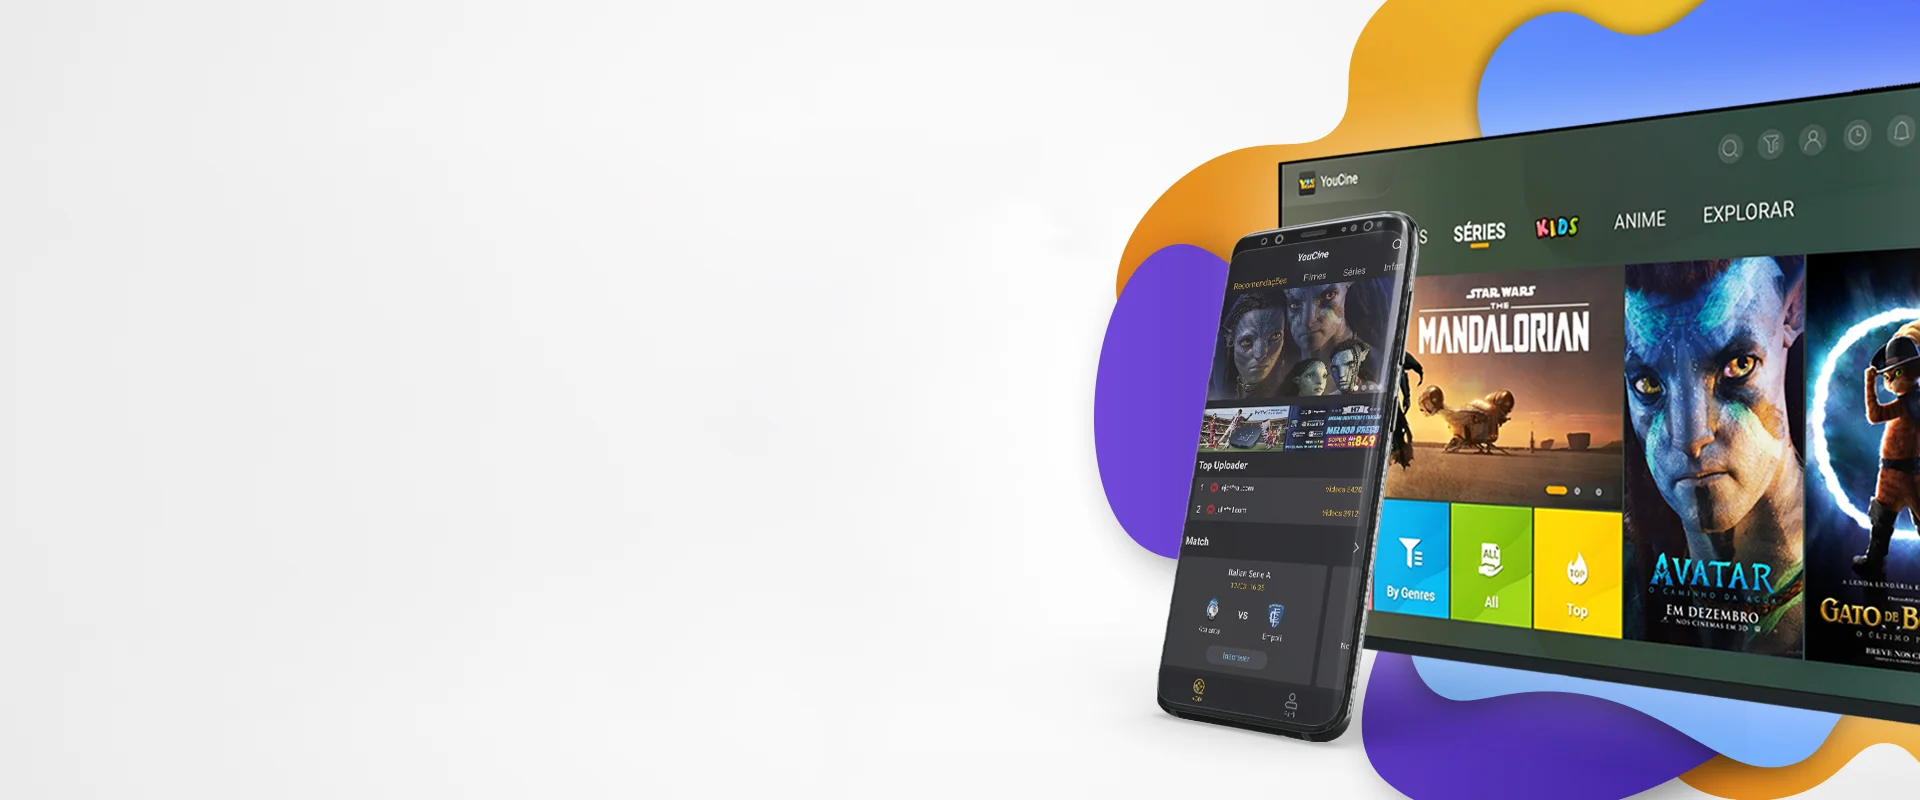 Download do APK de FUTBOL AO VIVO HD MAX para Android